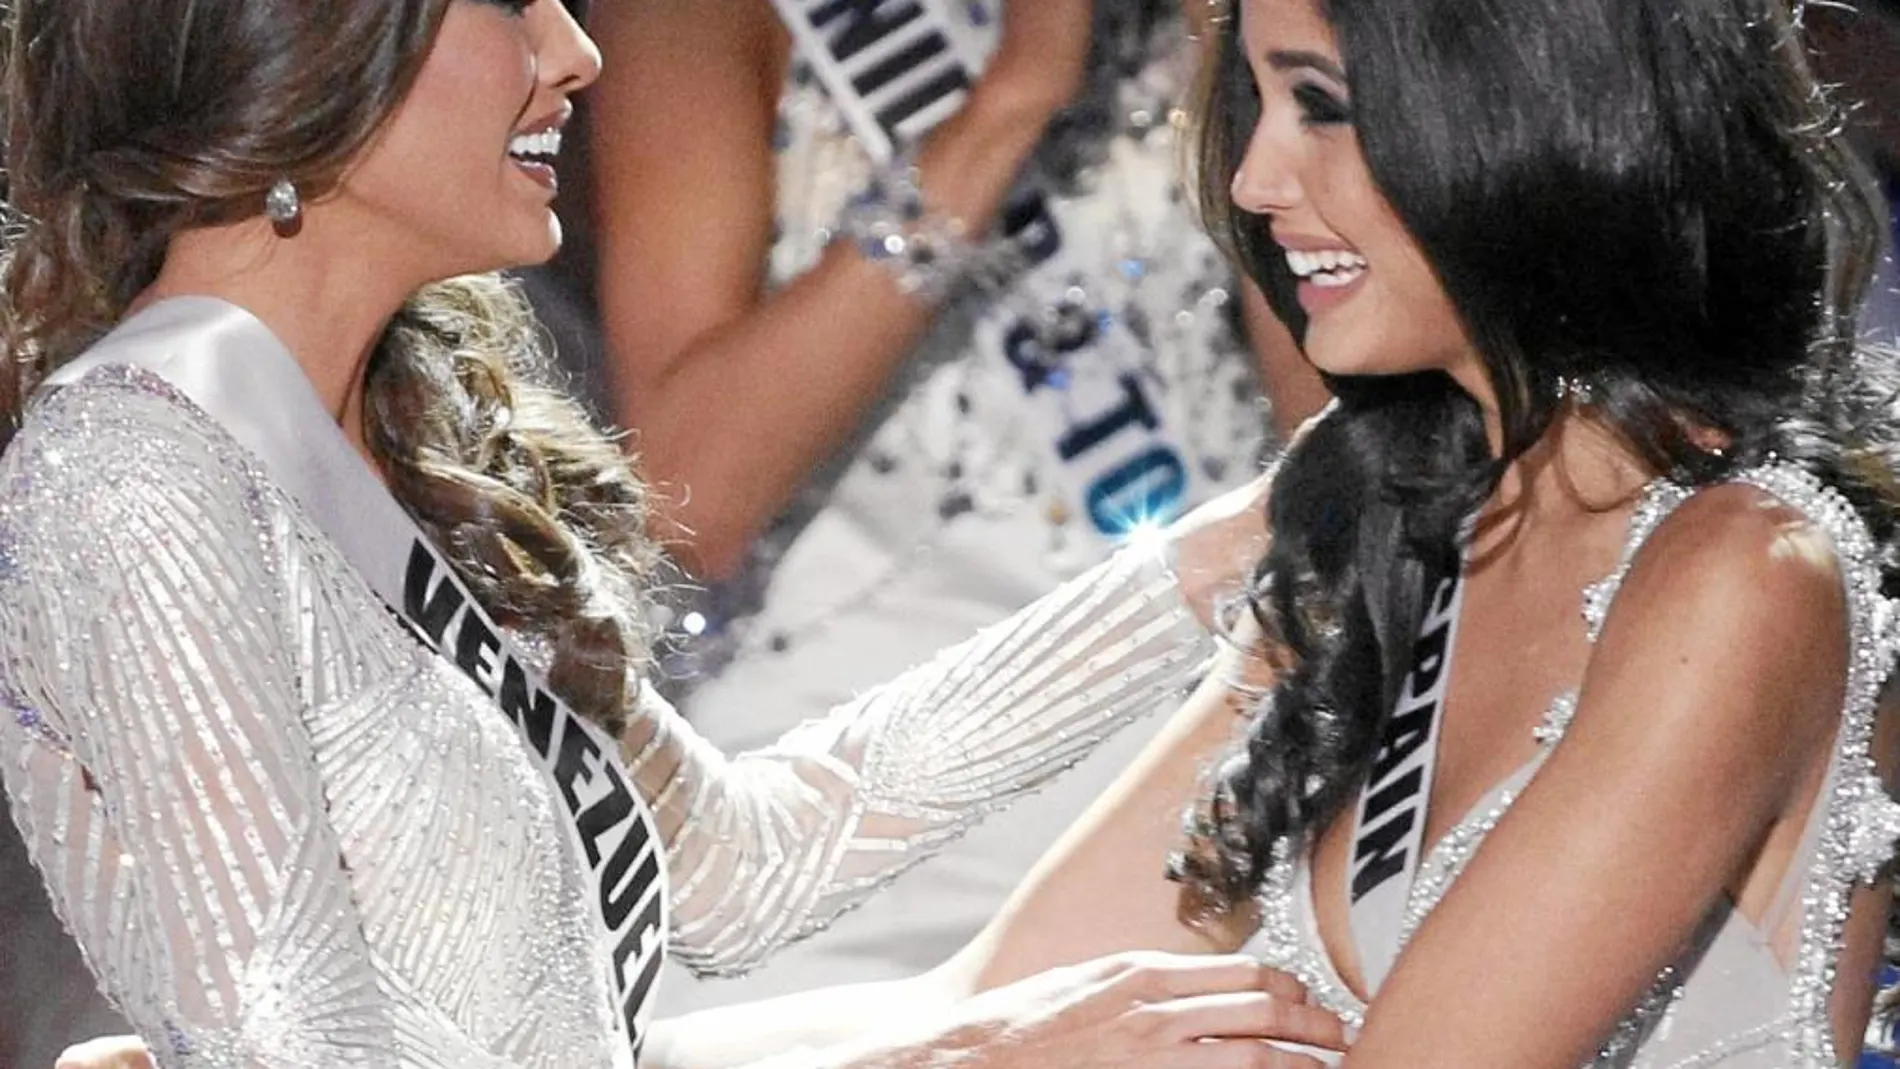 Un inversor venezolano salva Miss España